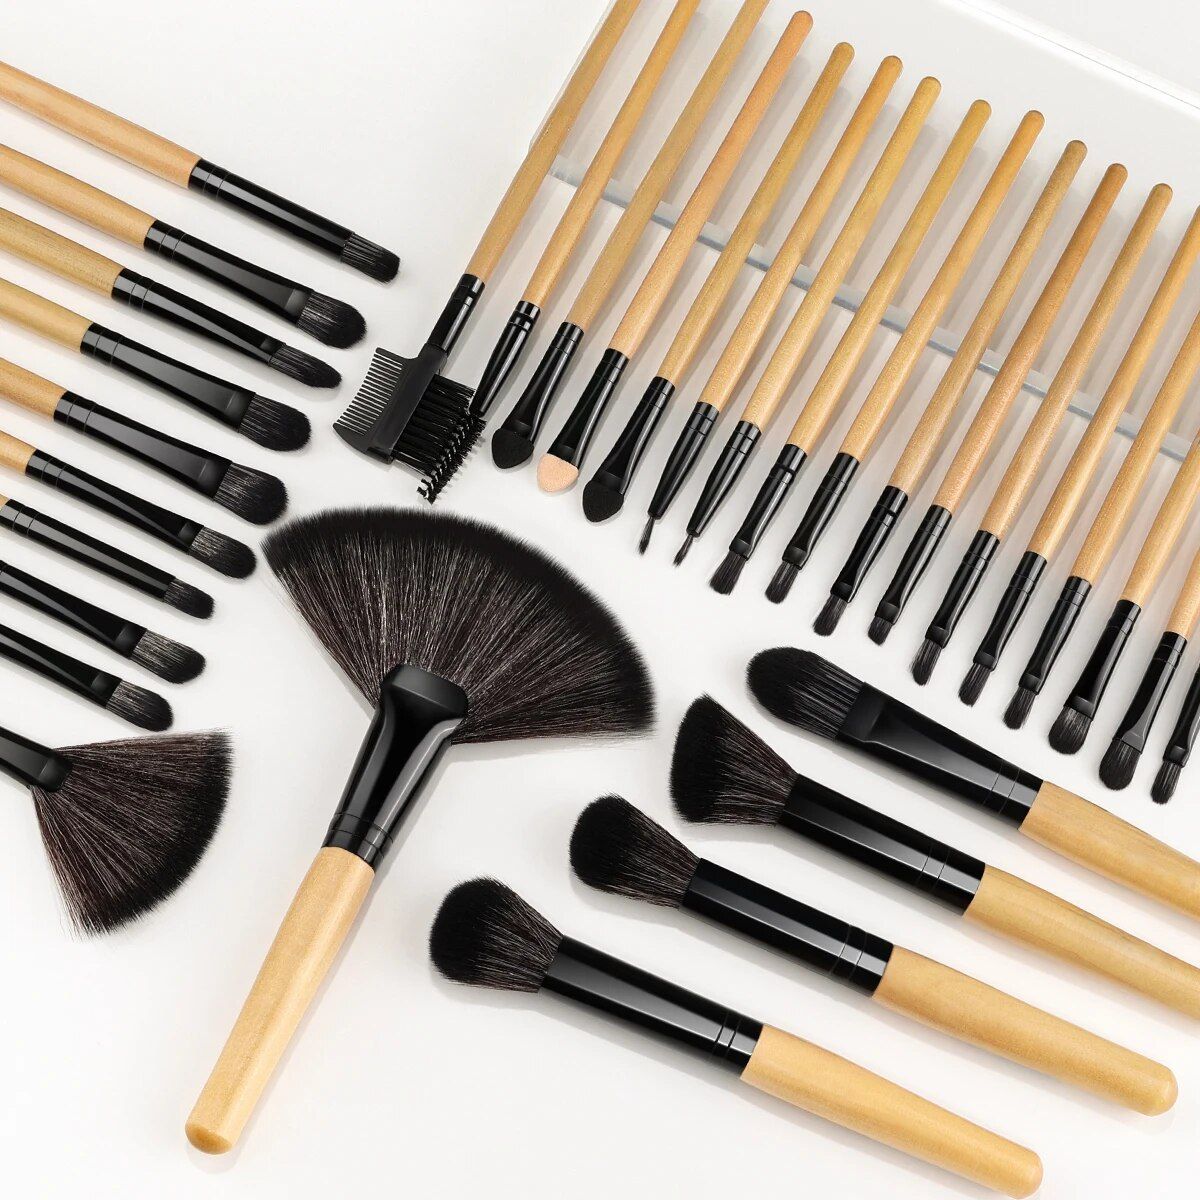 32-Piece Natural Hair Makeup Brush Set with Premium Wooden Handles